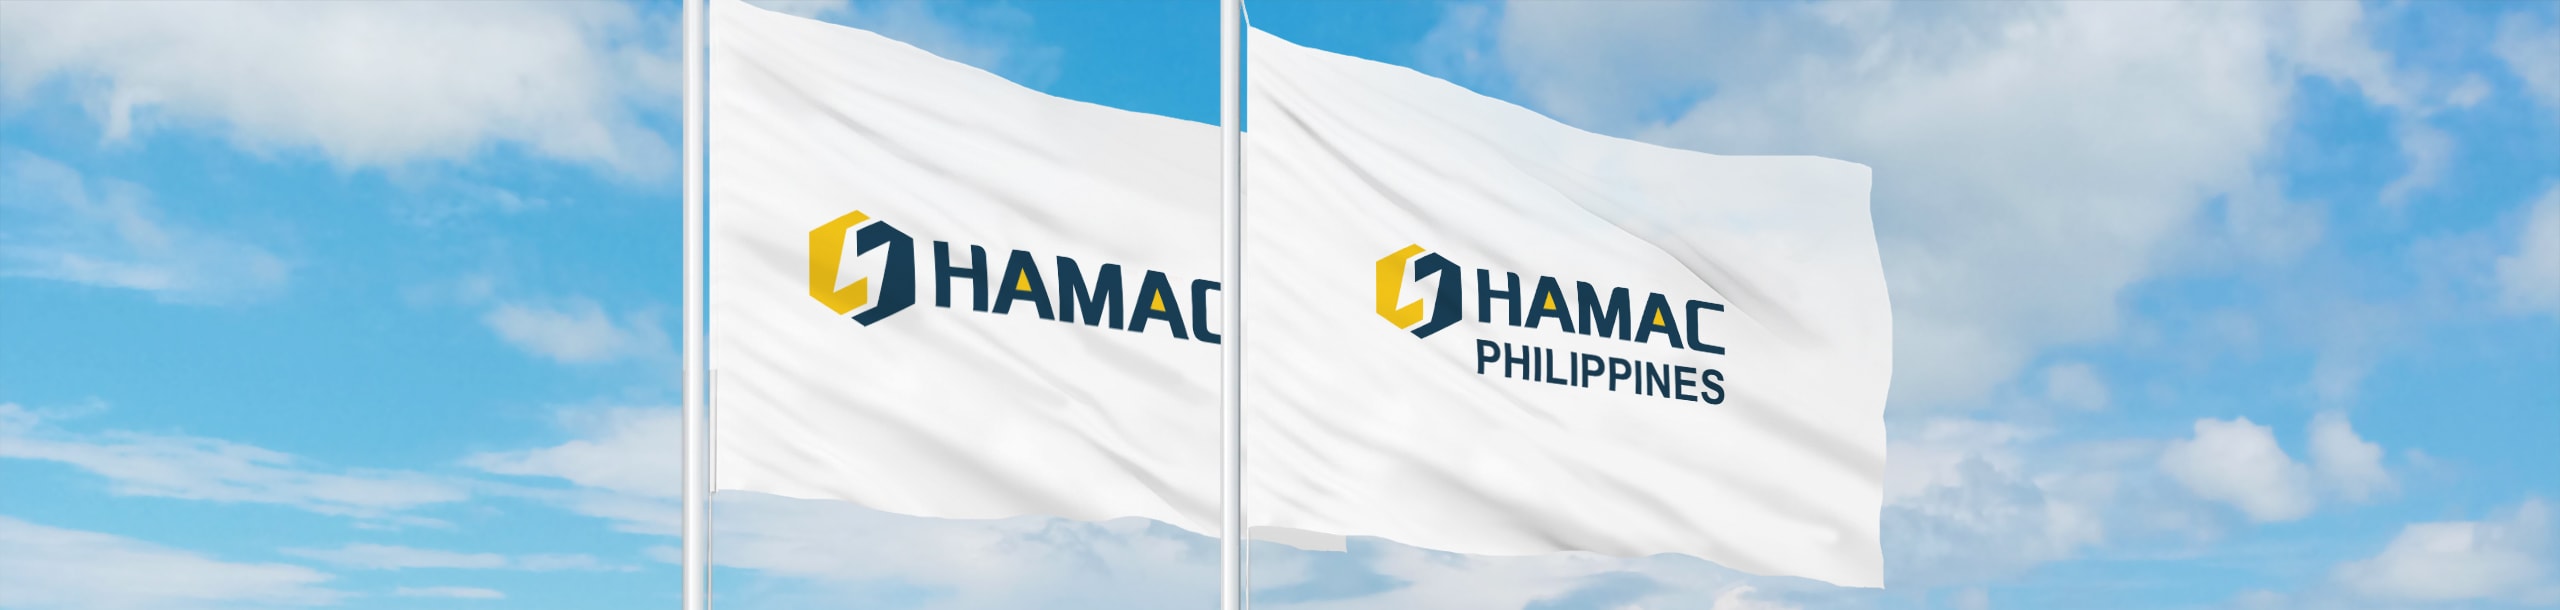 hamac service banner img